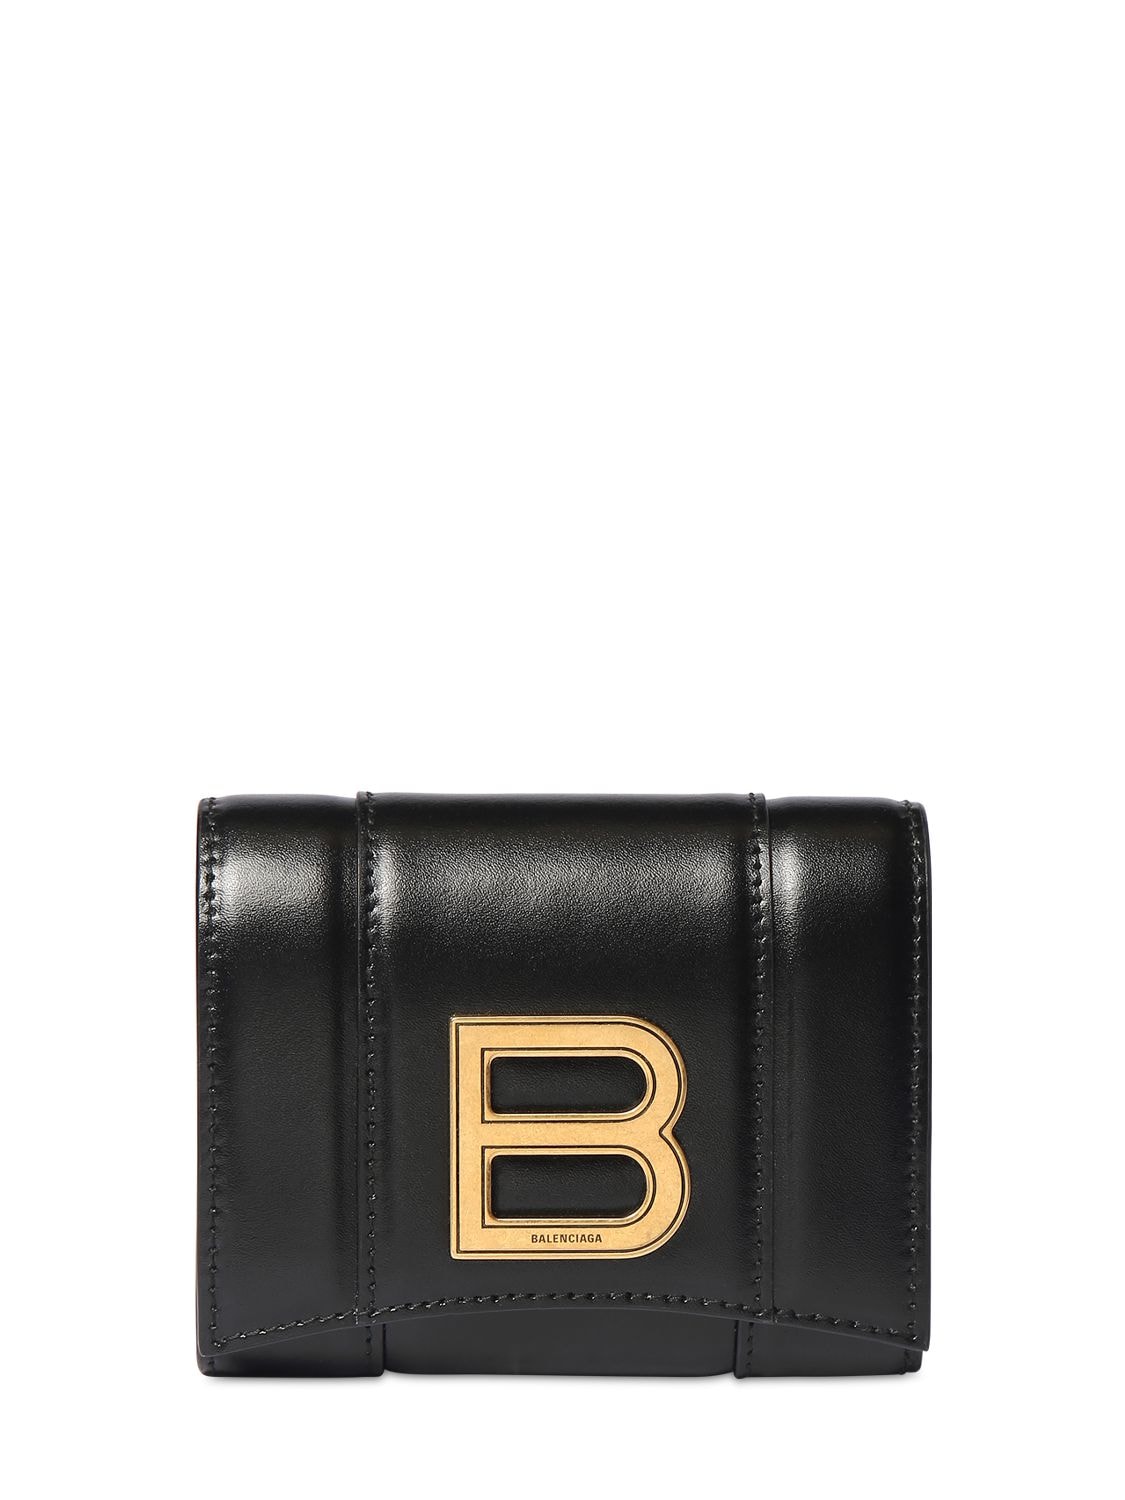 Balenciaga Hourglass Compact Leather Wallet In Black | ModeSens